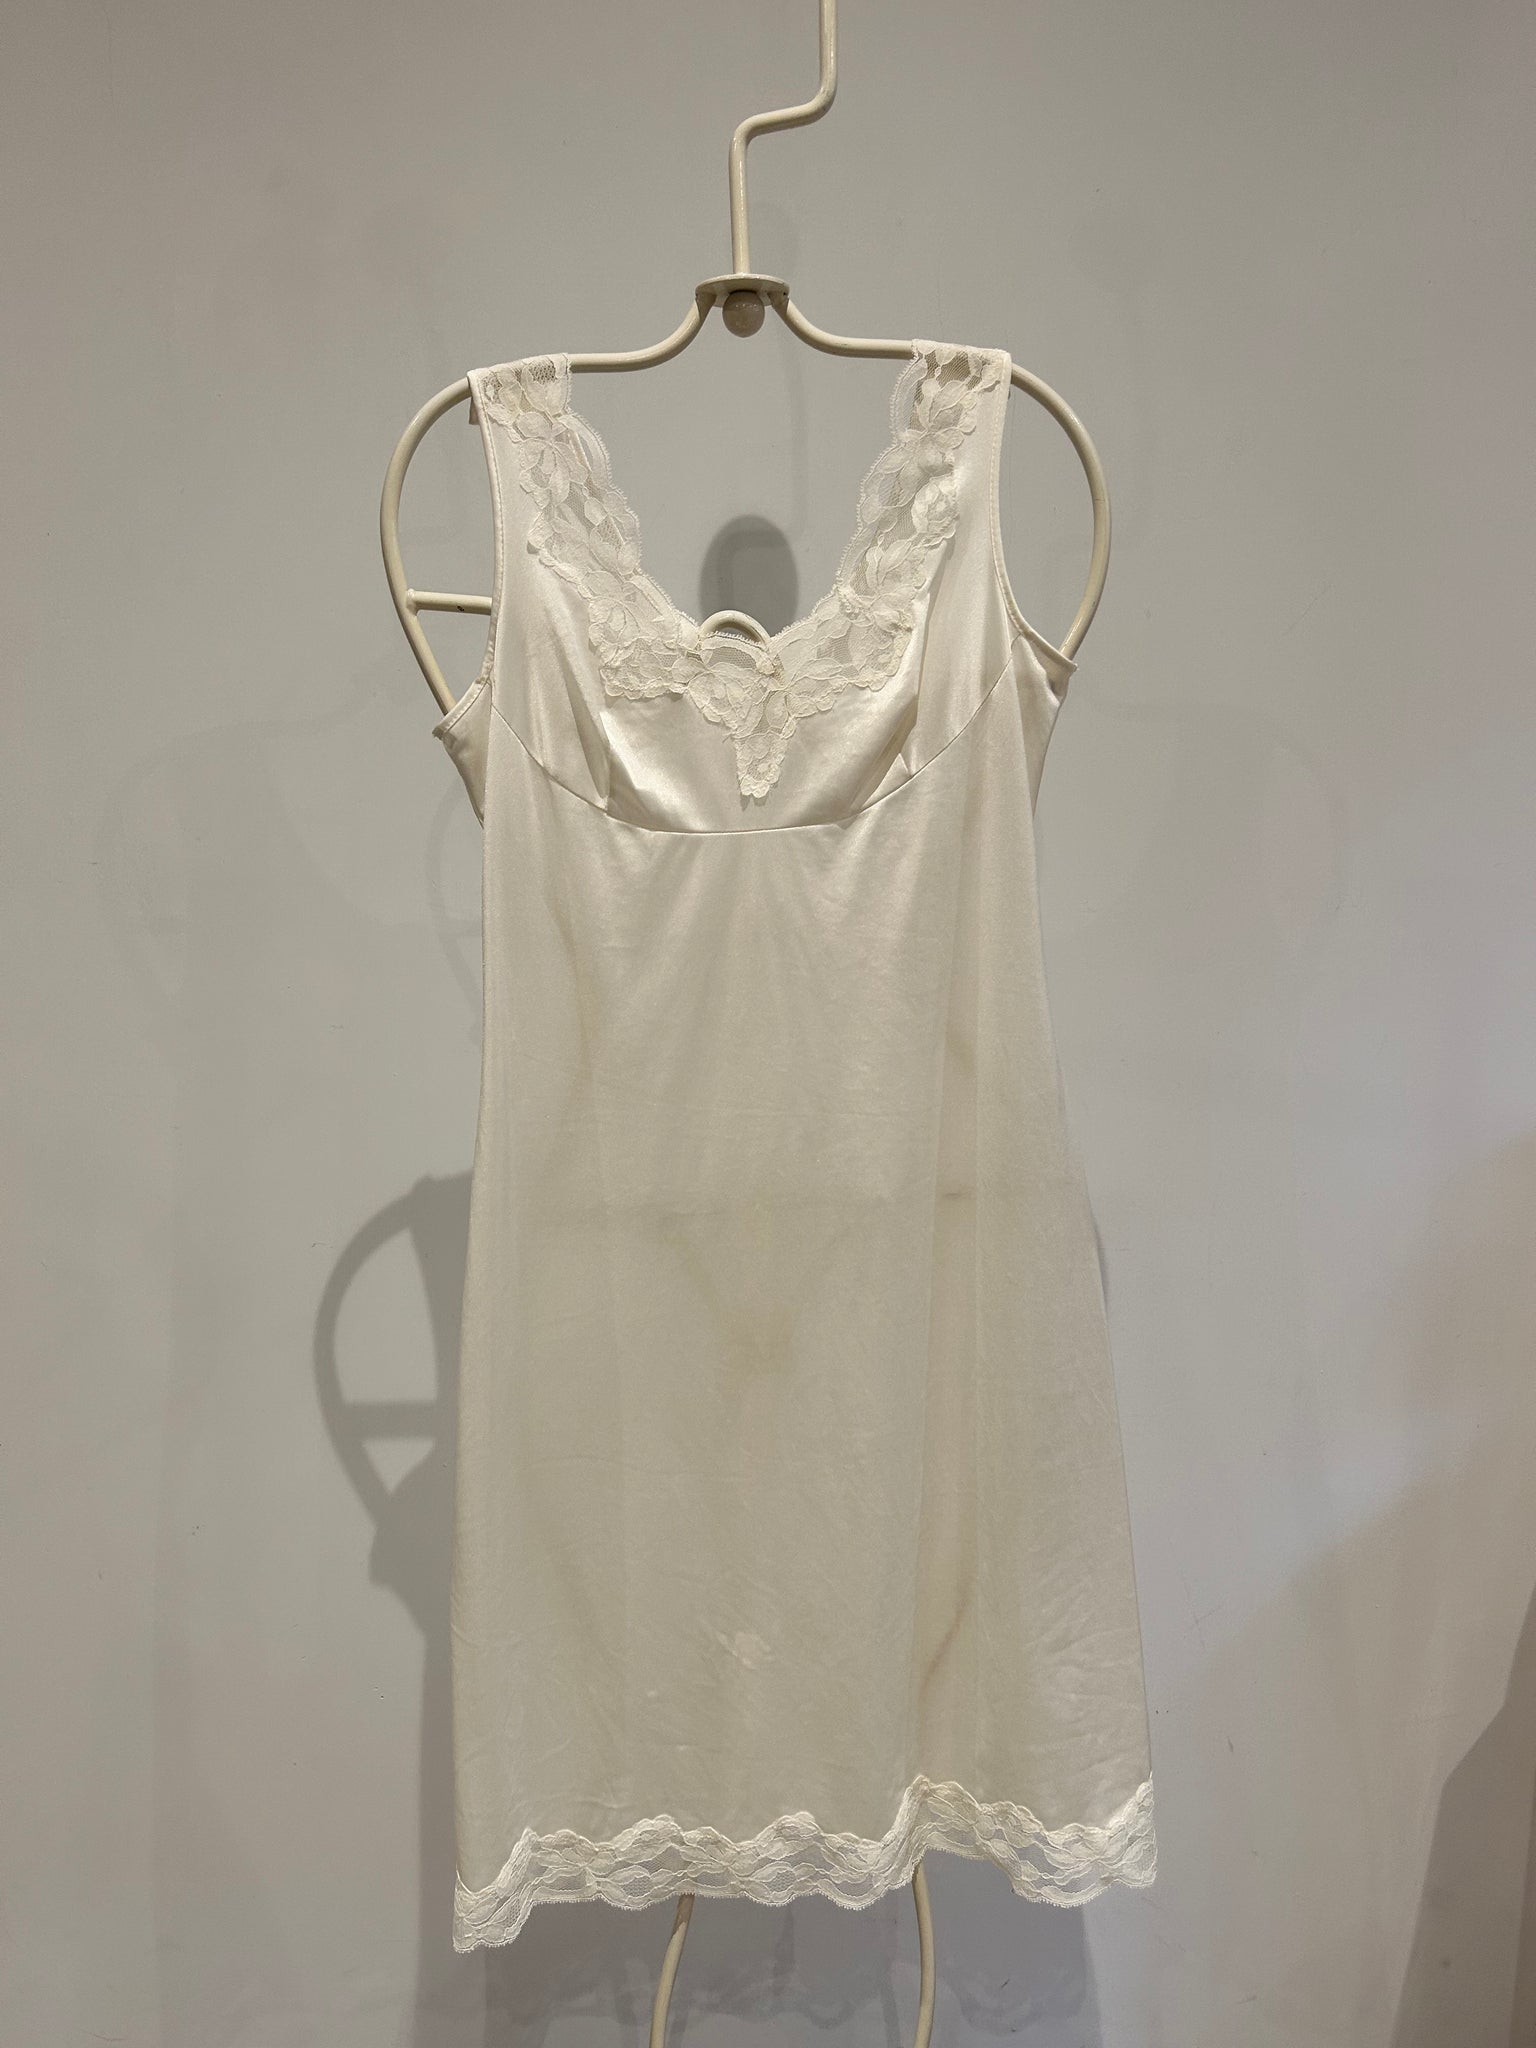 Thrifted vintage & pre-loved lingerie & slip dresses part 2